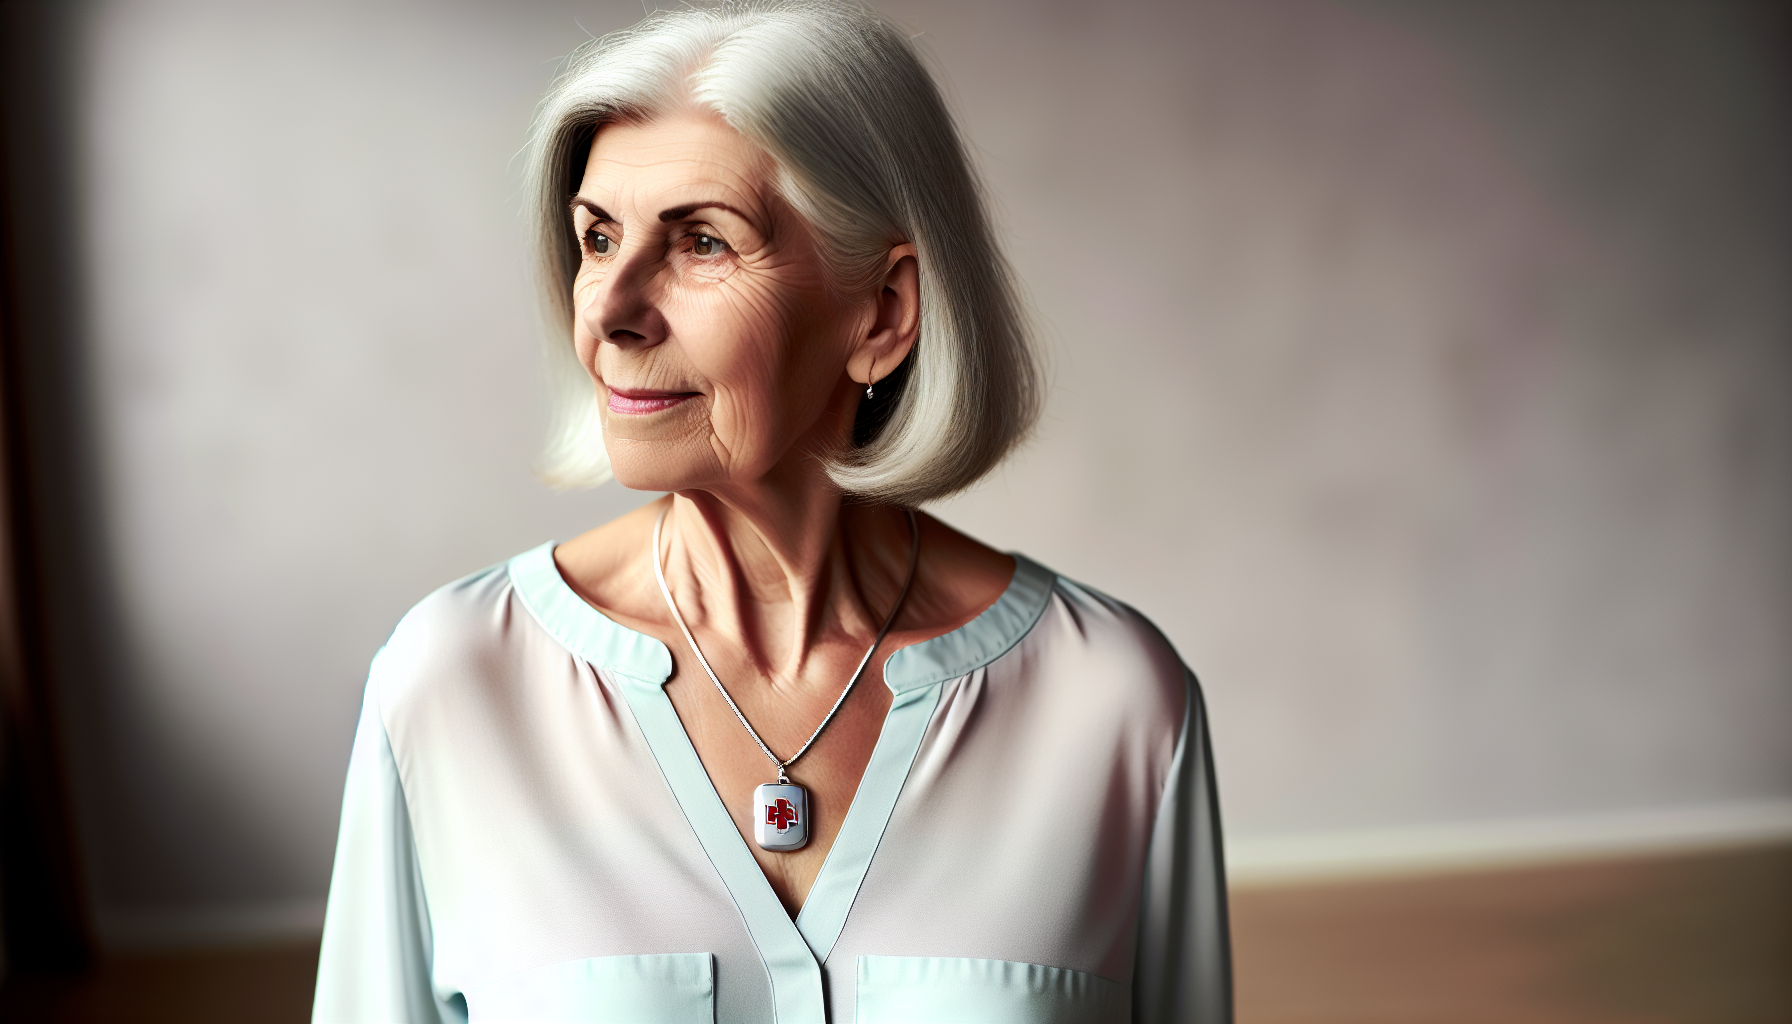 Elderly woman wearing a medical alert necklace